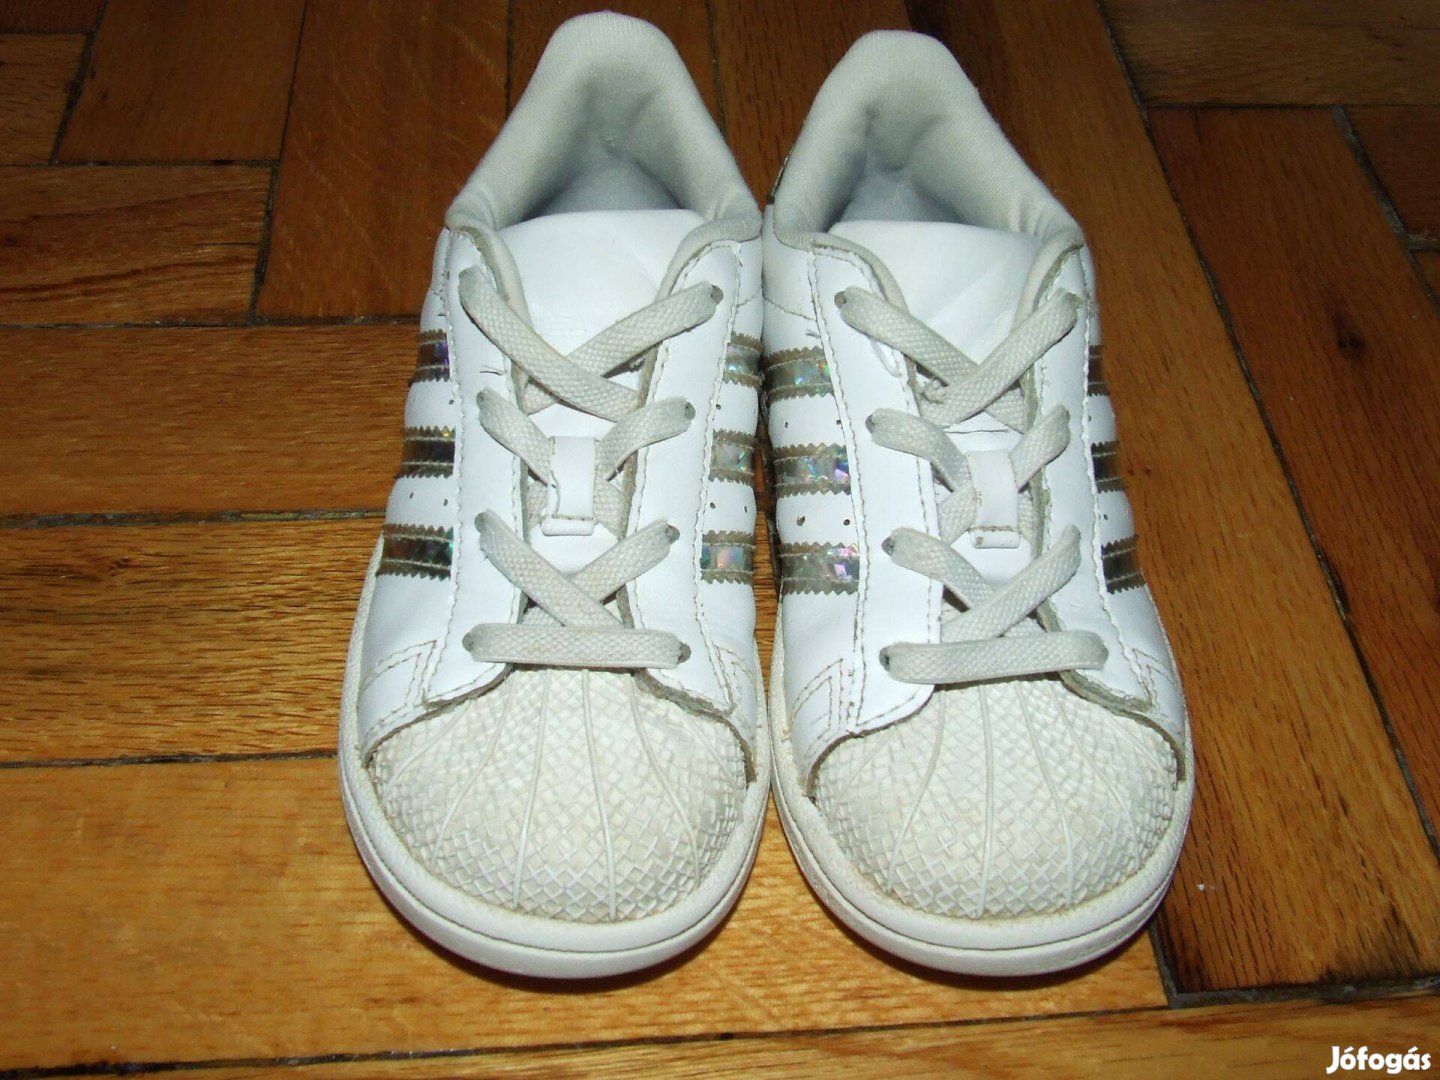 Adidas cipő 26-27 méret